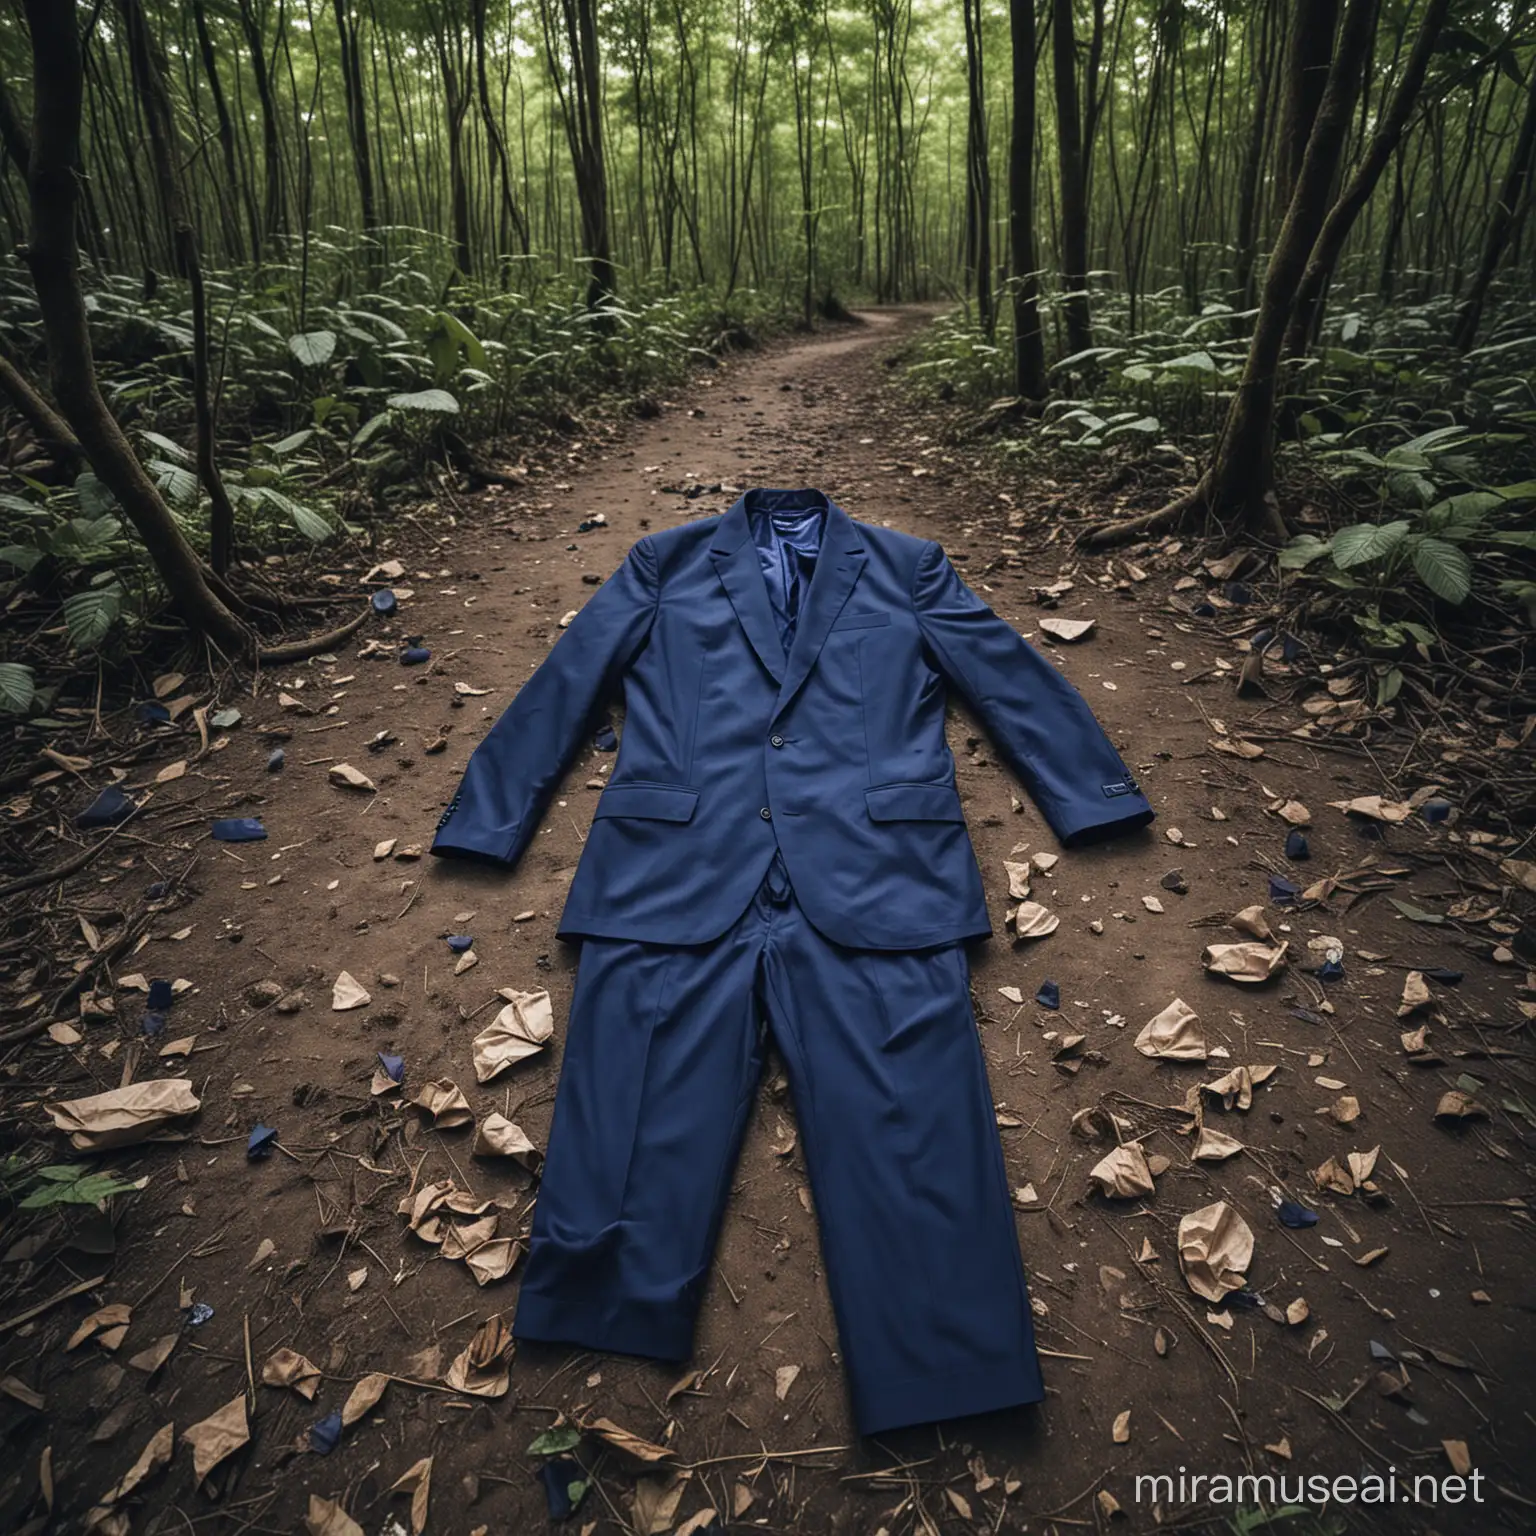 crumpled  celebrate dark blue suit thrown on the ground. 
amazon forest